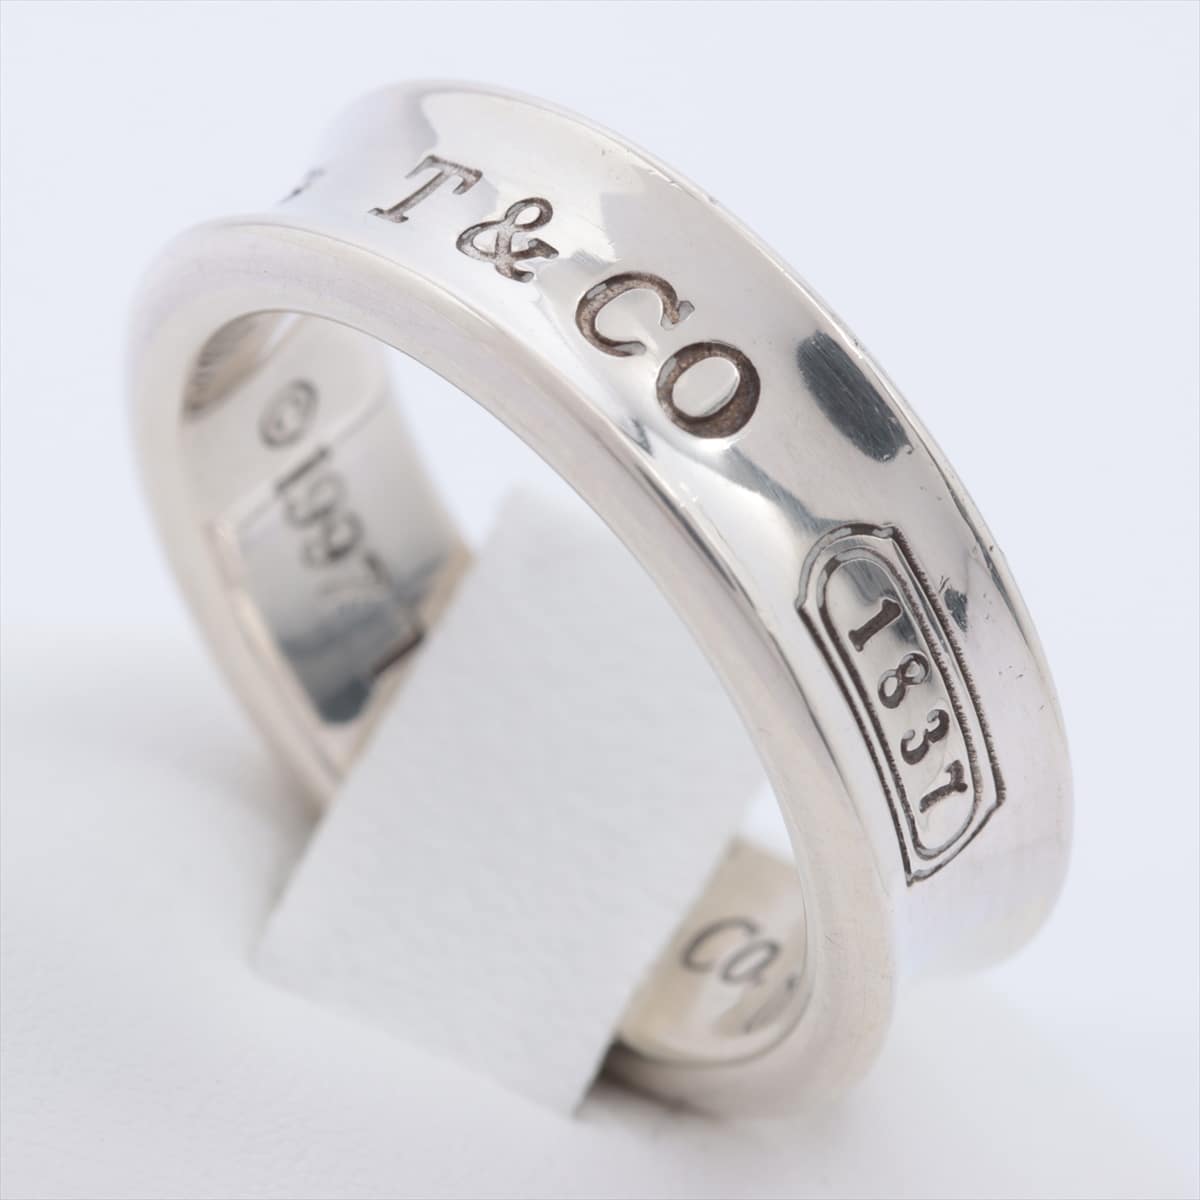 Tiffany 1837 Narrow rings 925 8.4g Silver